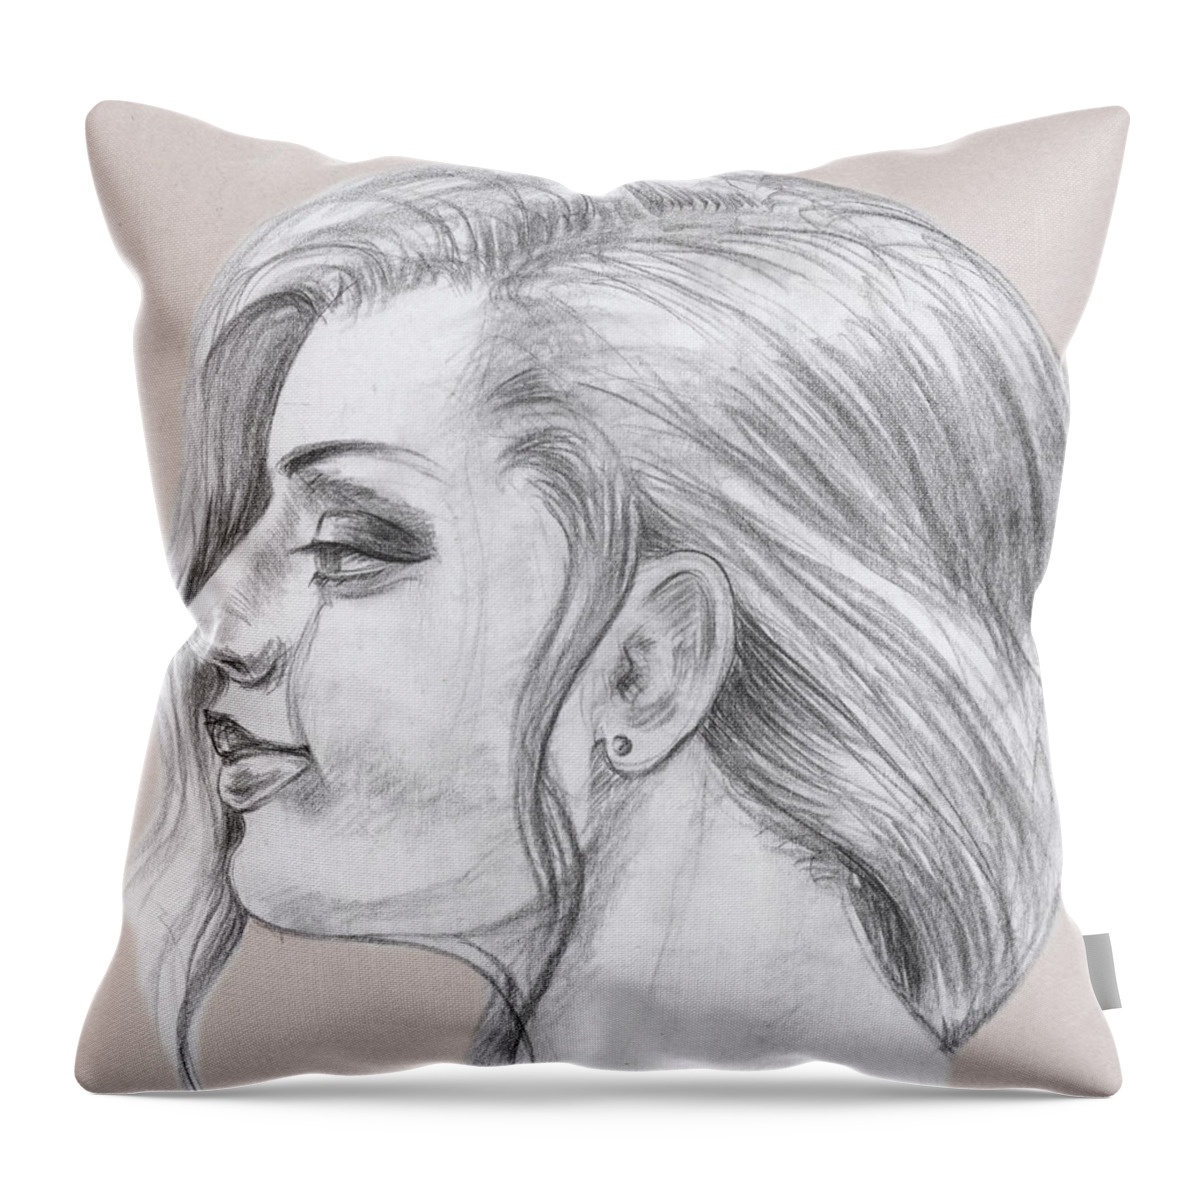 Woman Throw Pillow featuring the drawing Young Woman Head Study Profile by Irina Sztukowski